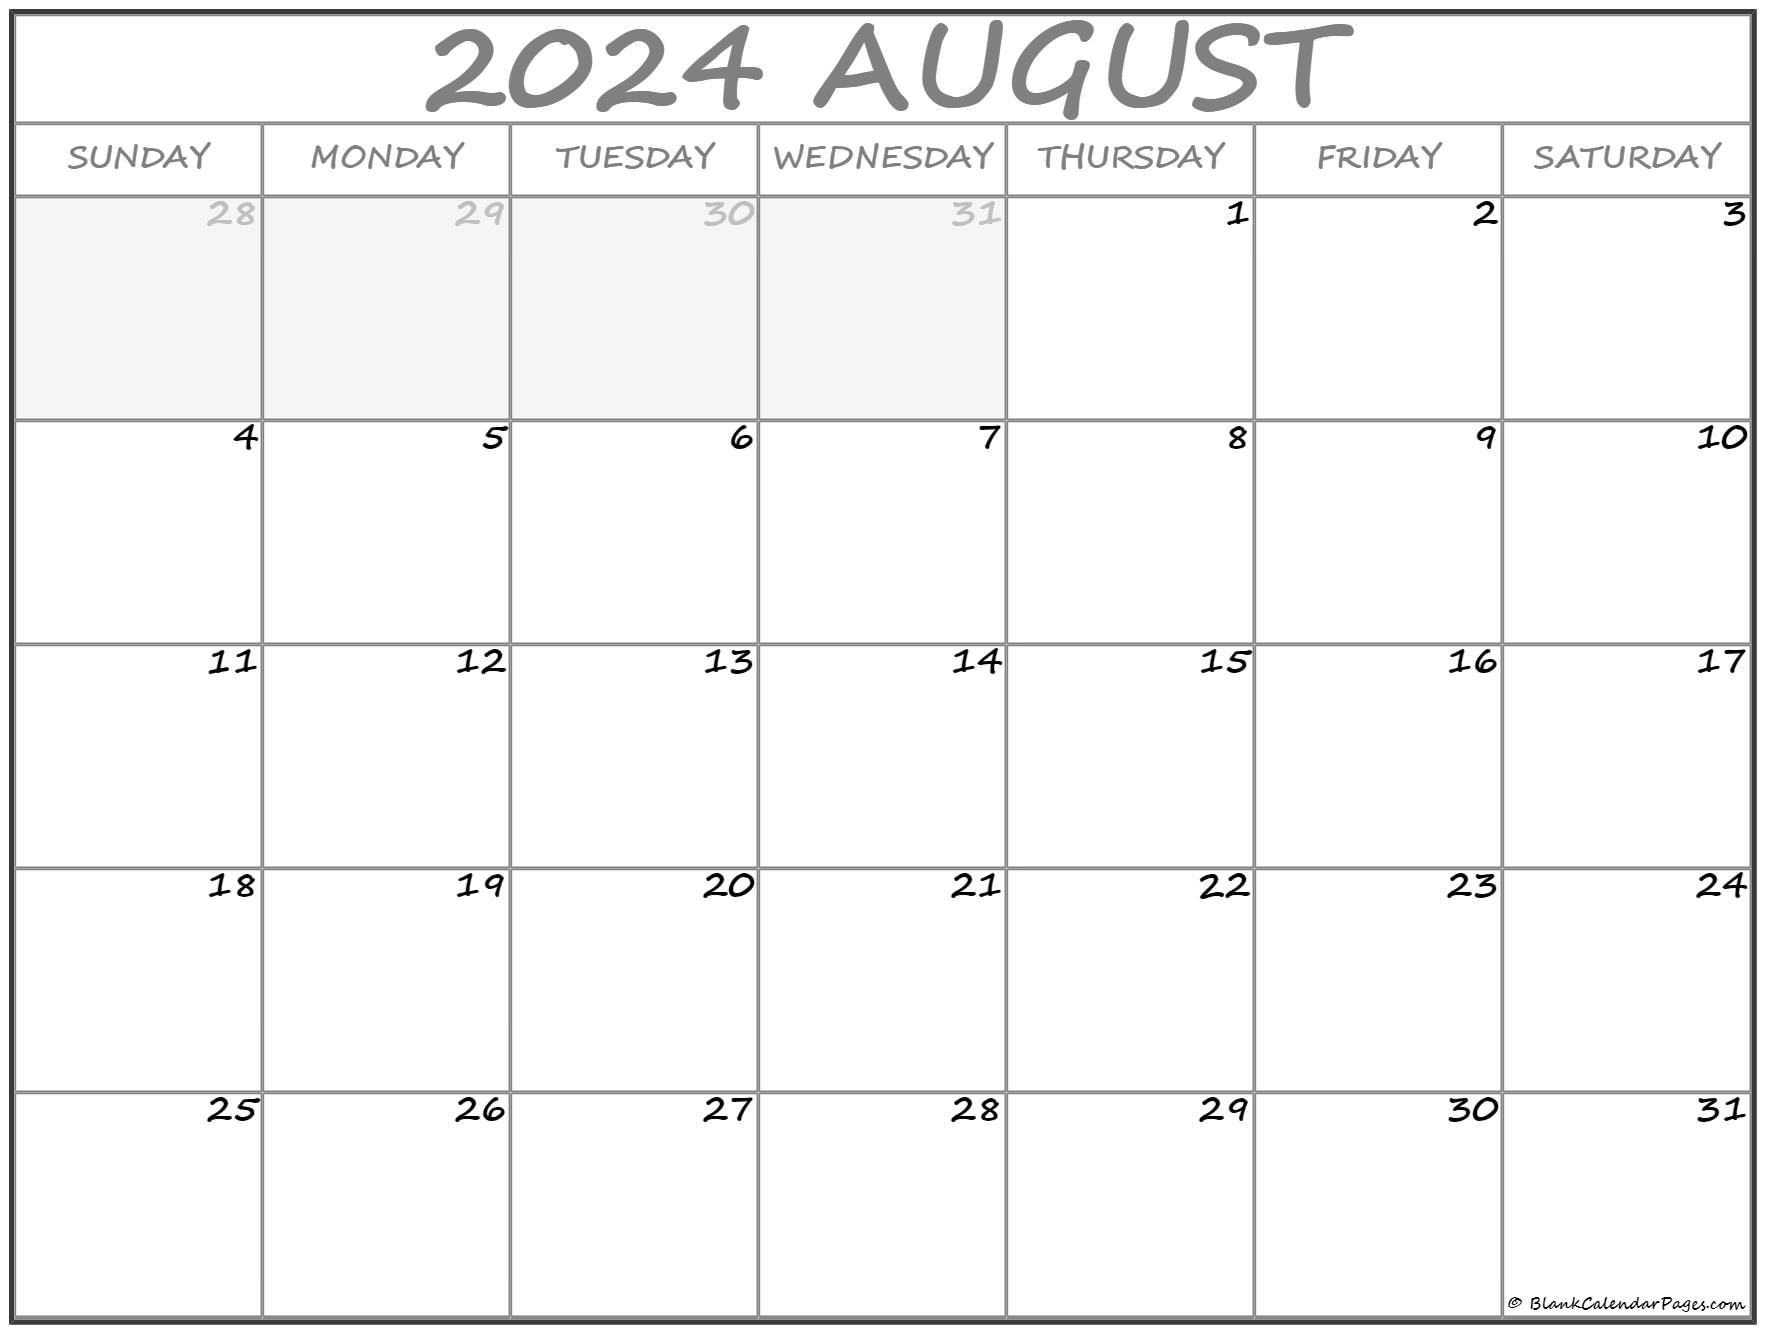 August 2022 calendar | free printable calendar